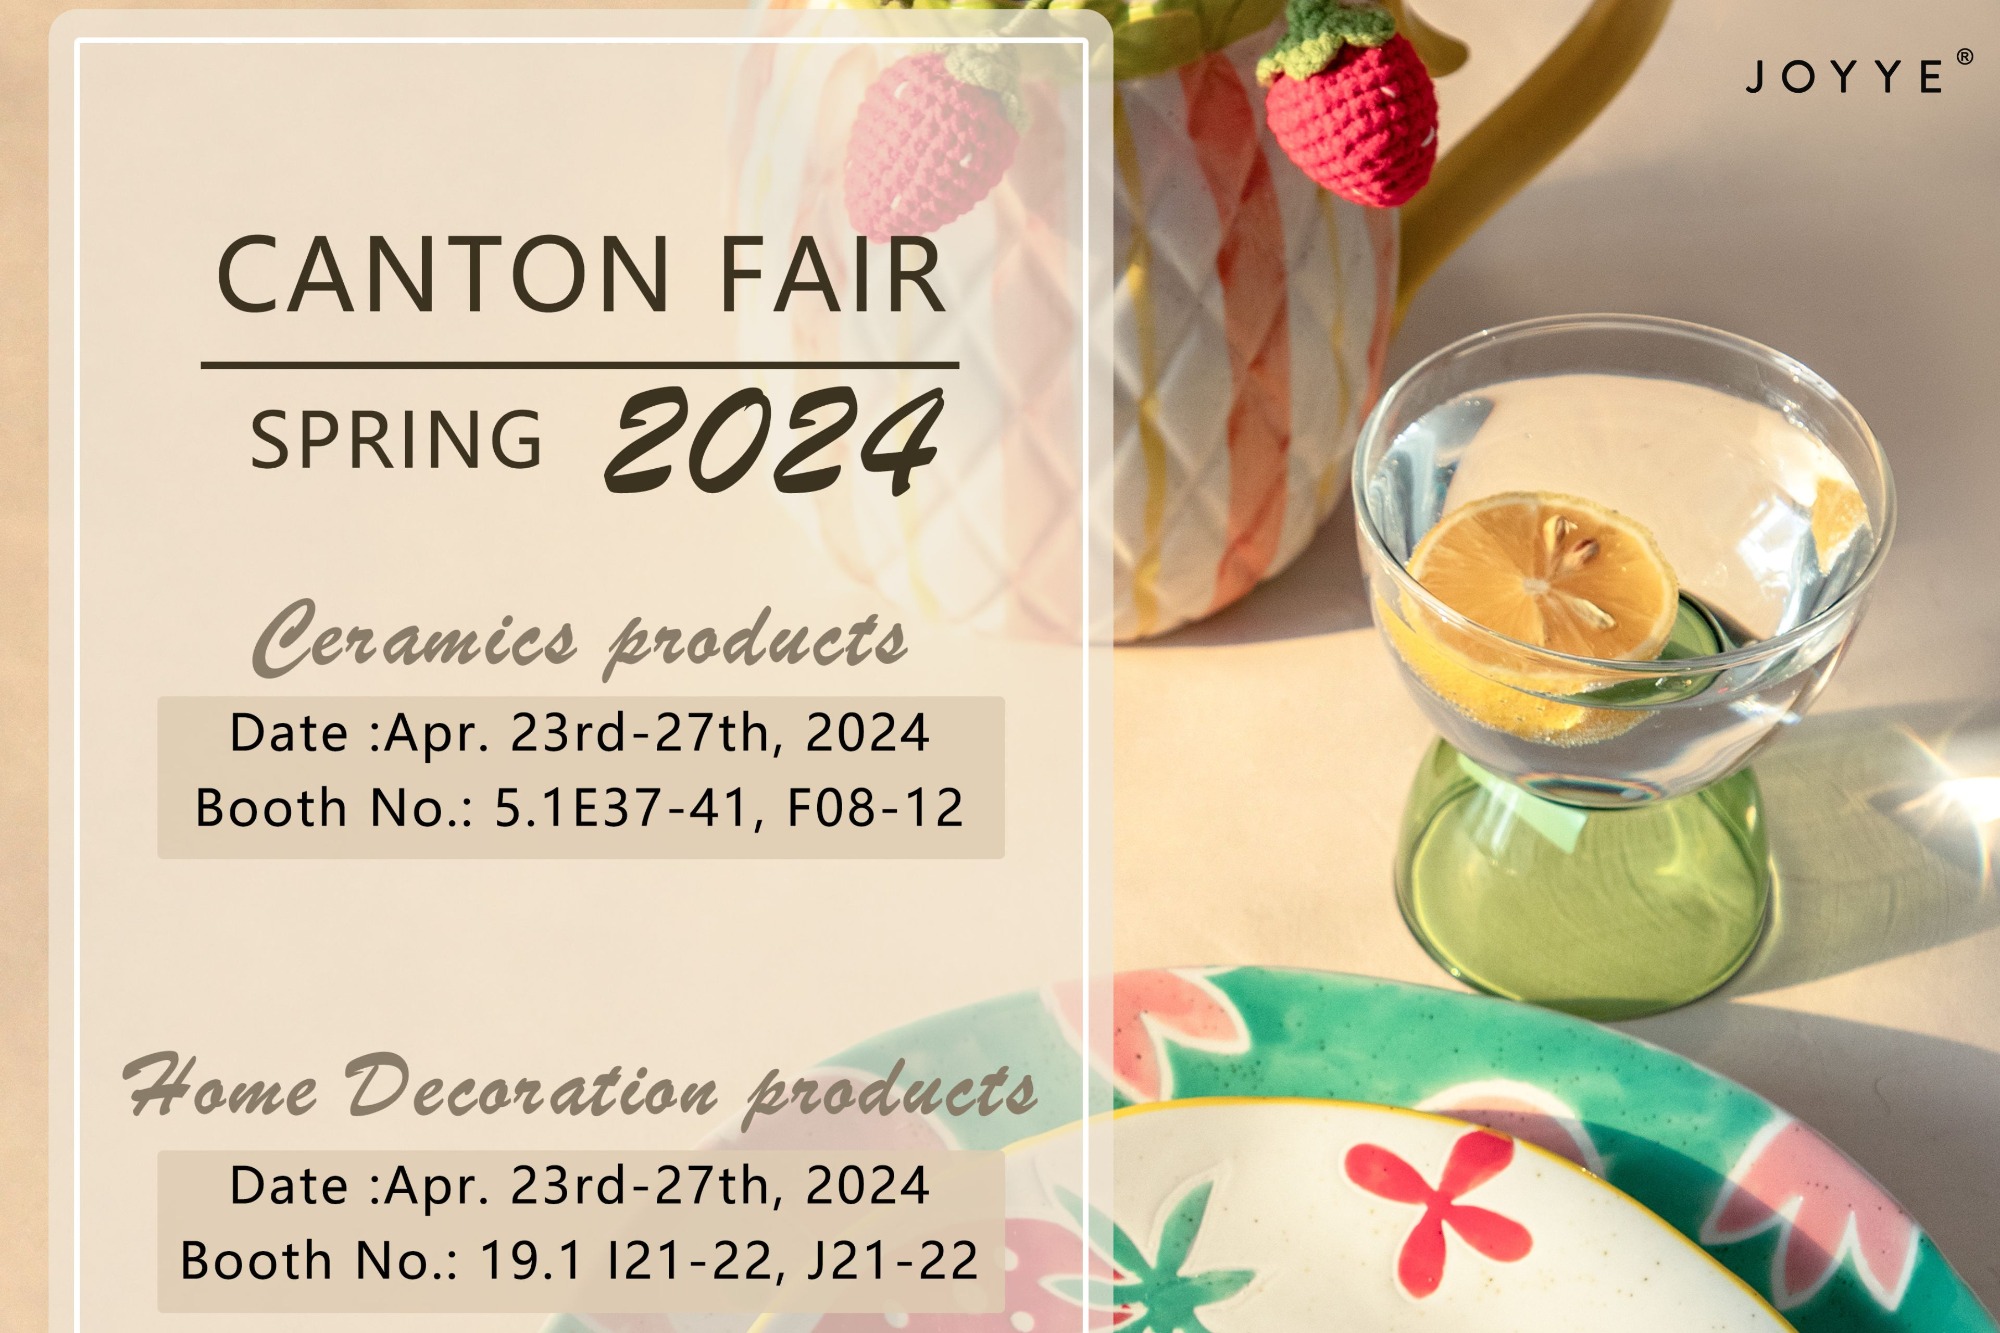 Joyye 2024 Spring Canton Fair Invitation